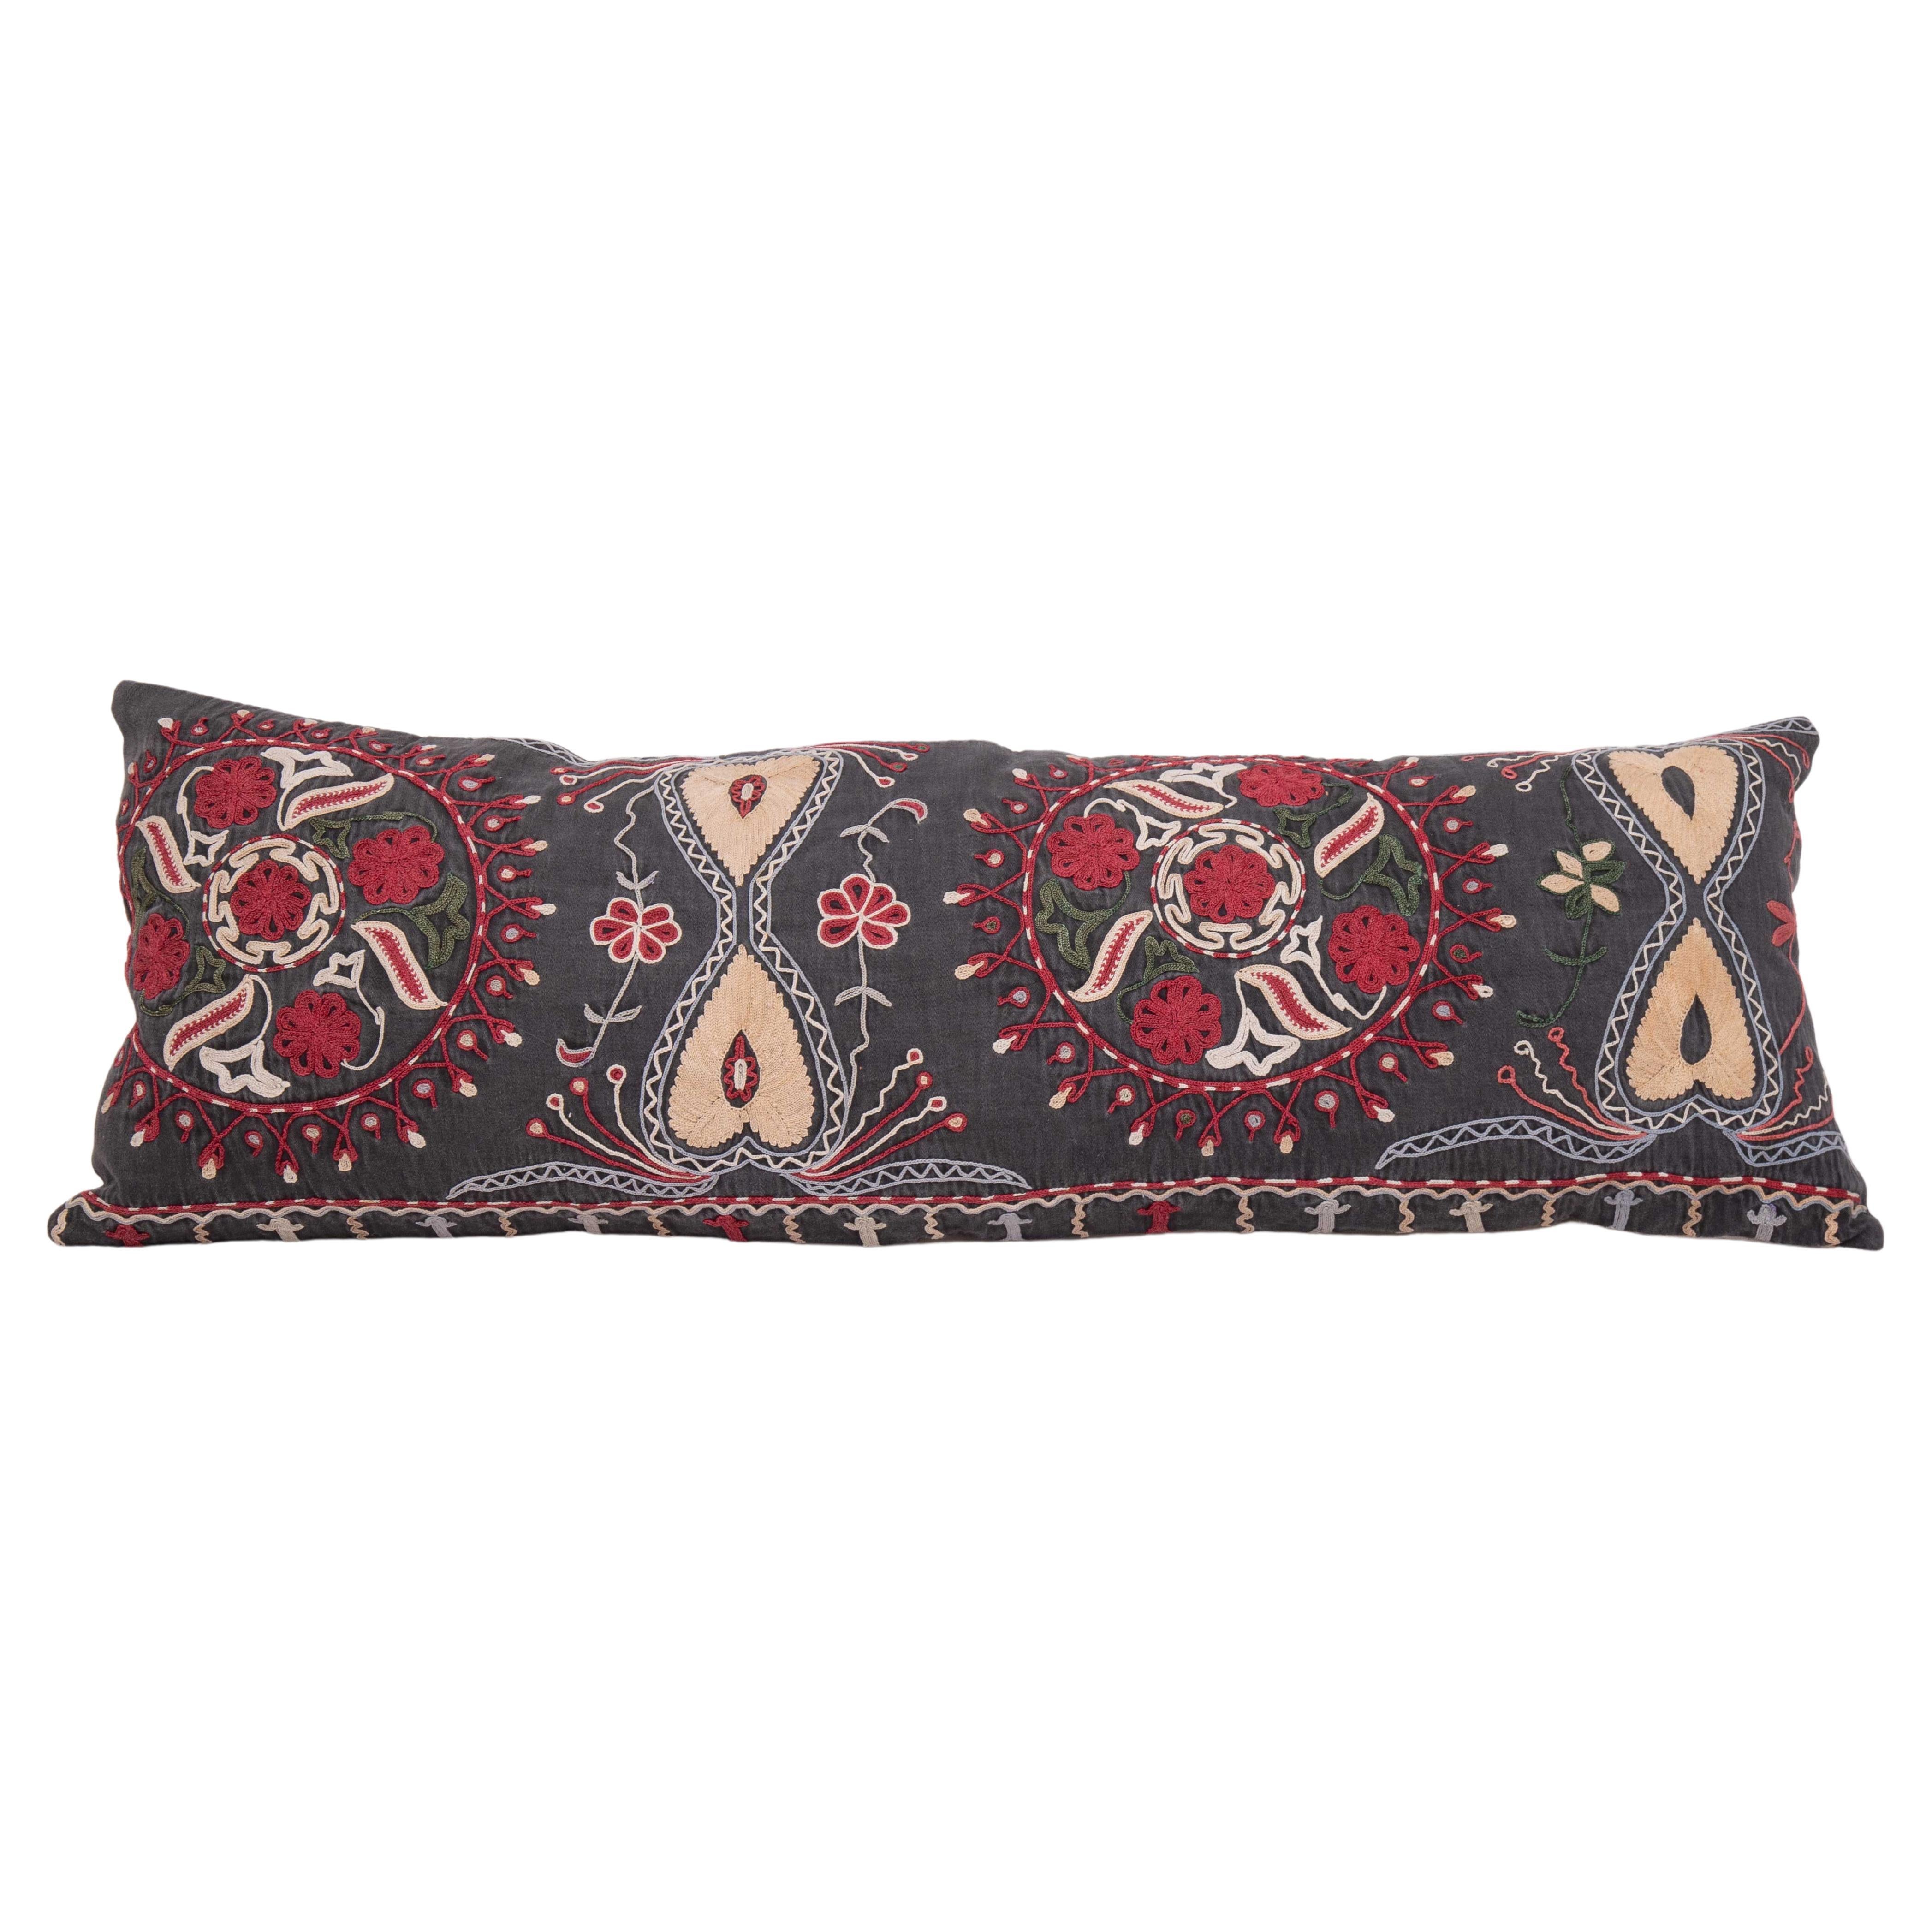 Lumbar Pillowcase Made from a Mid-20th C, Kazak / Kyrgyz Embroidery